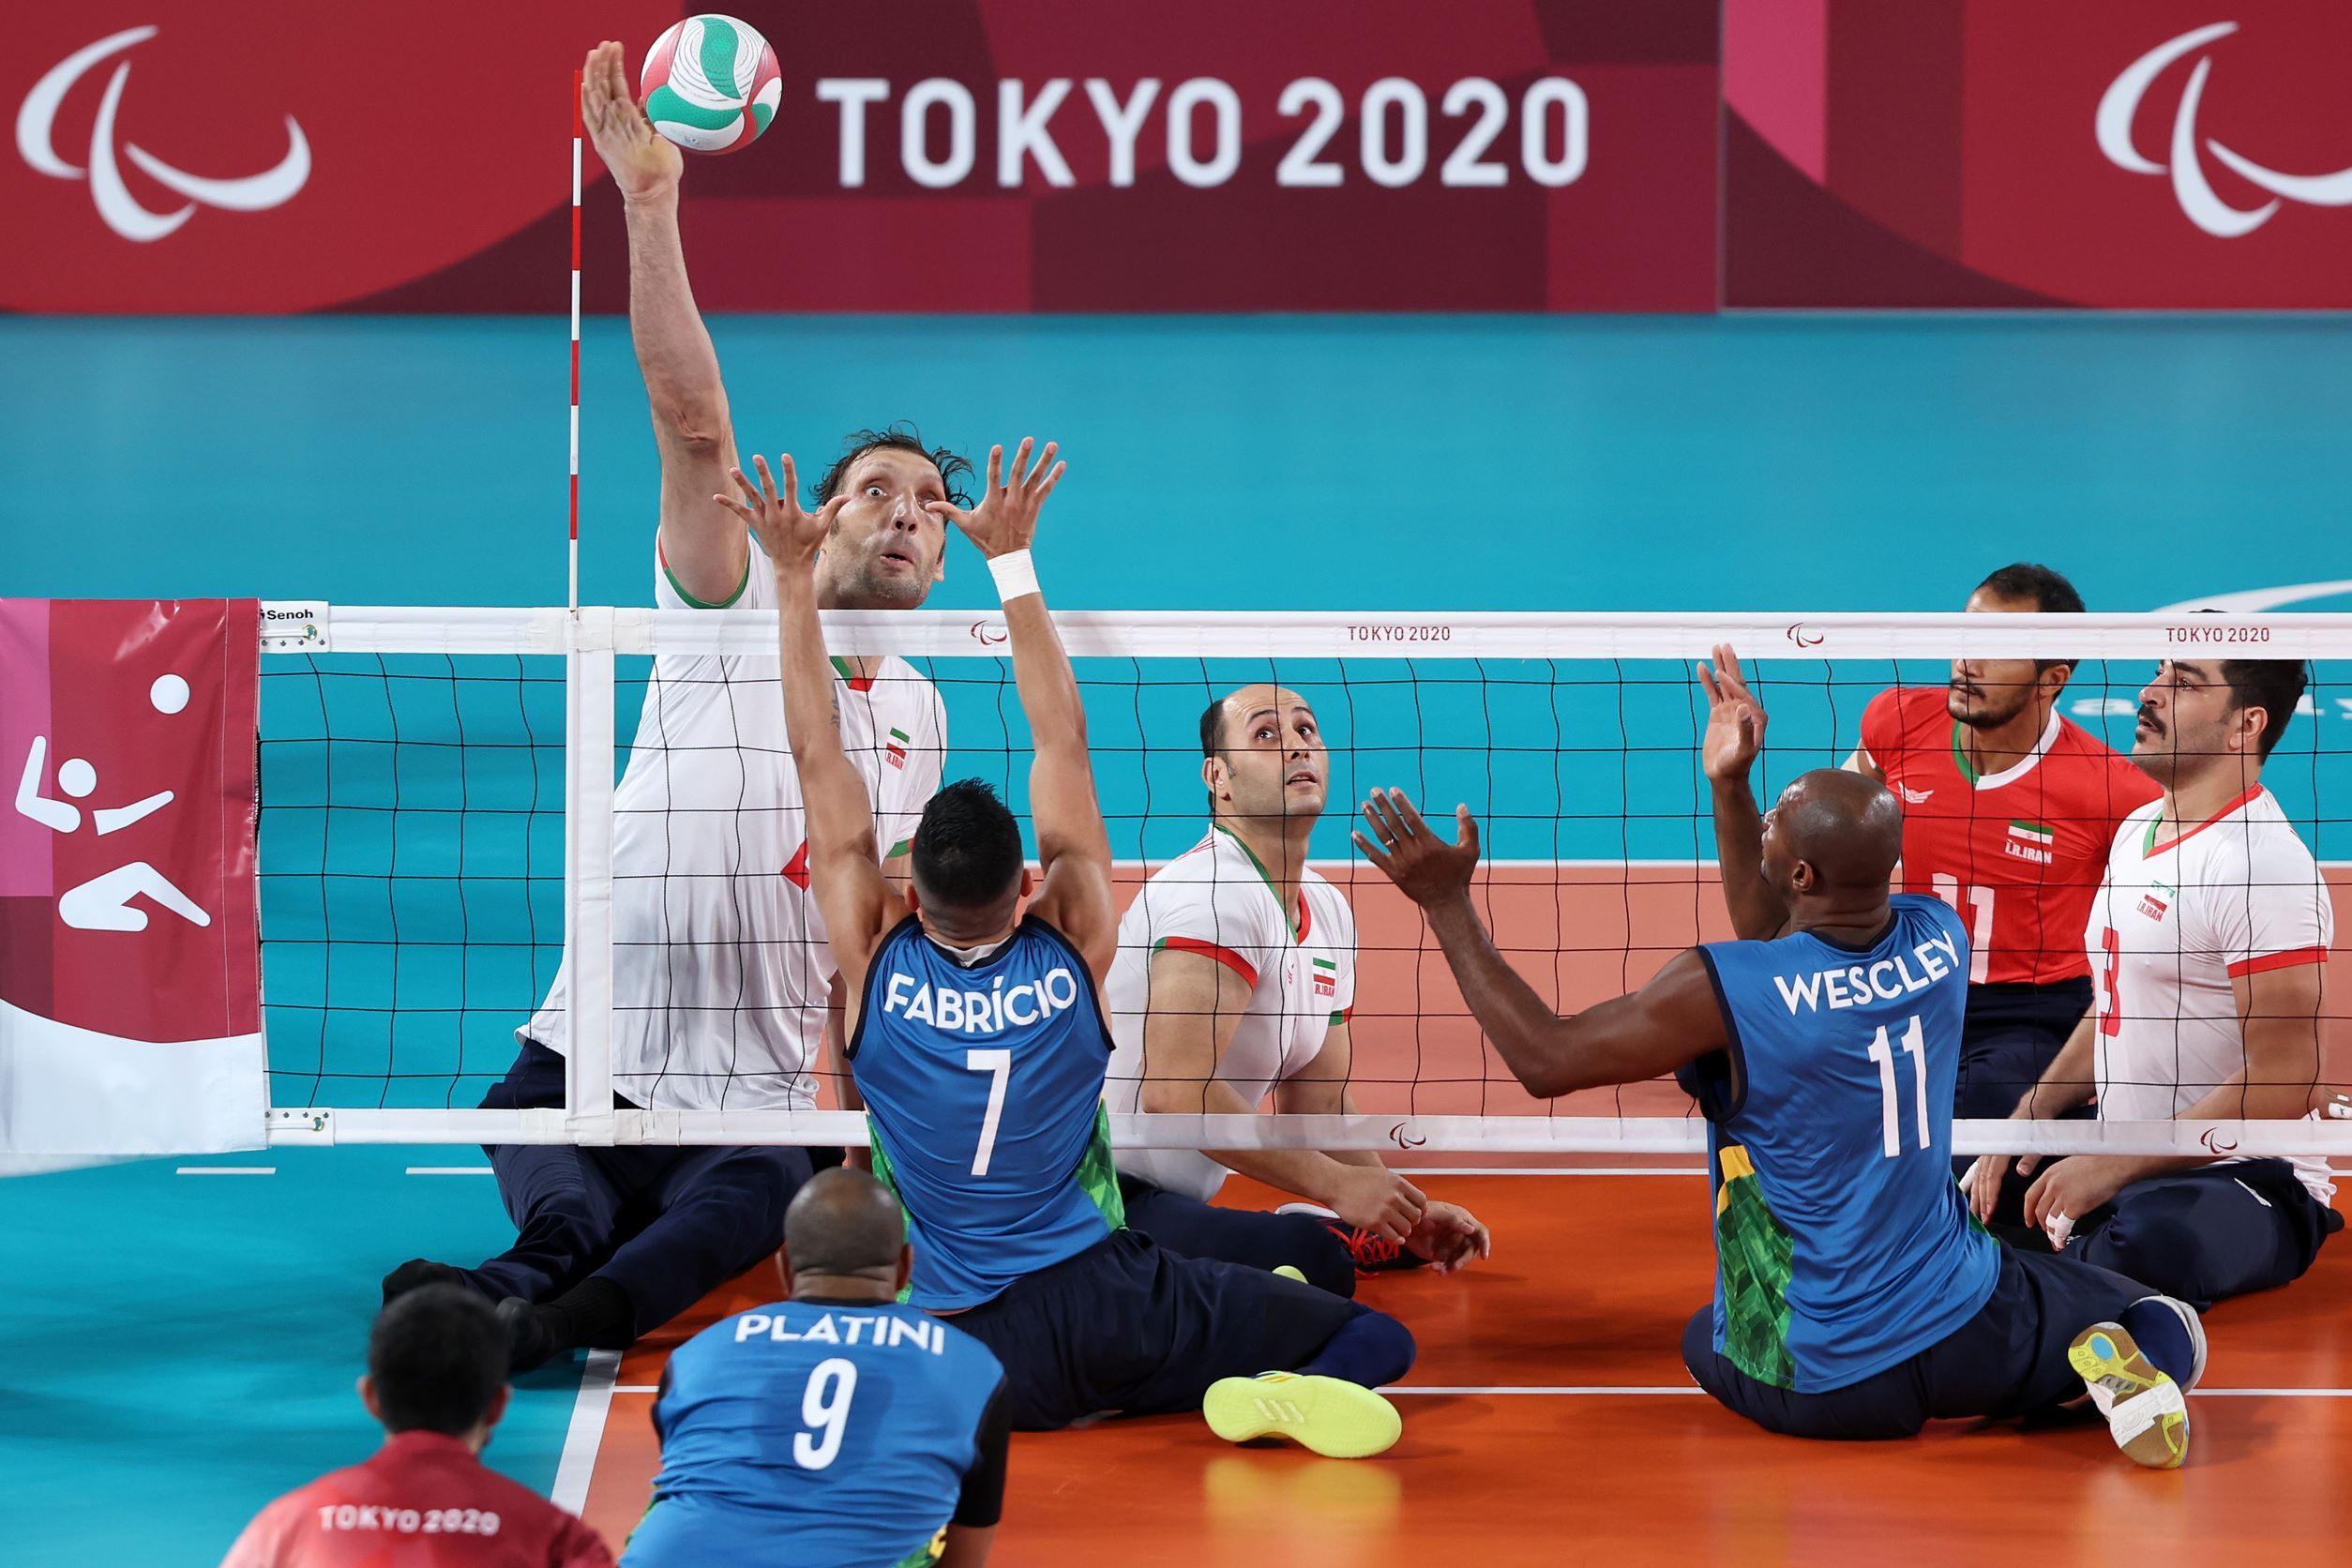 Volleyball Paris 2024 vlr.eng.br